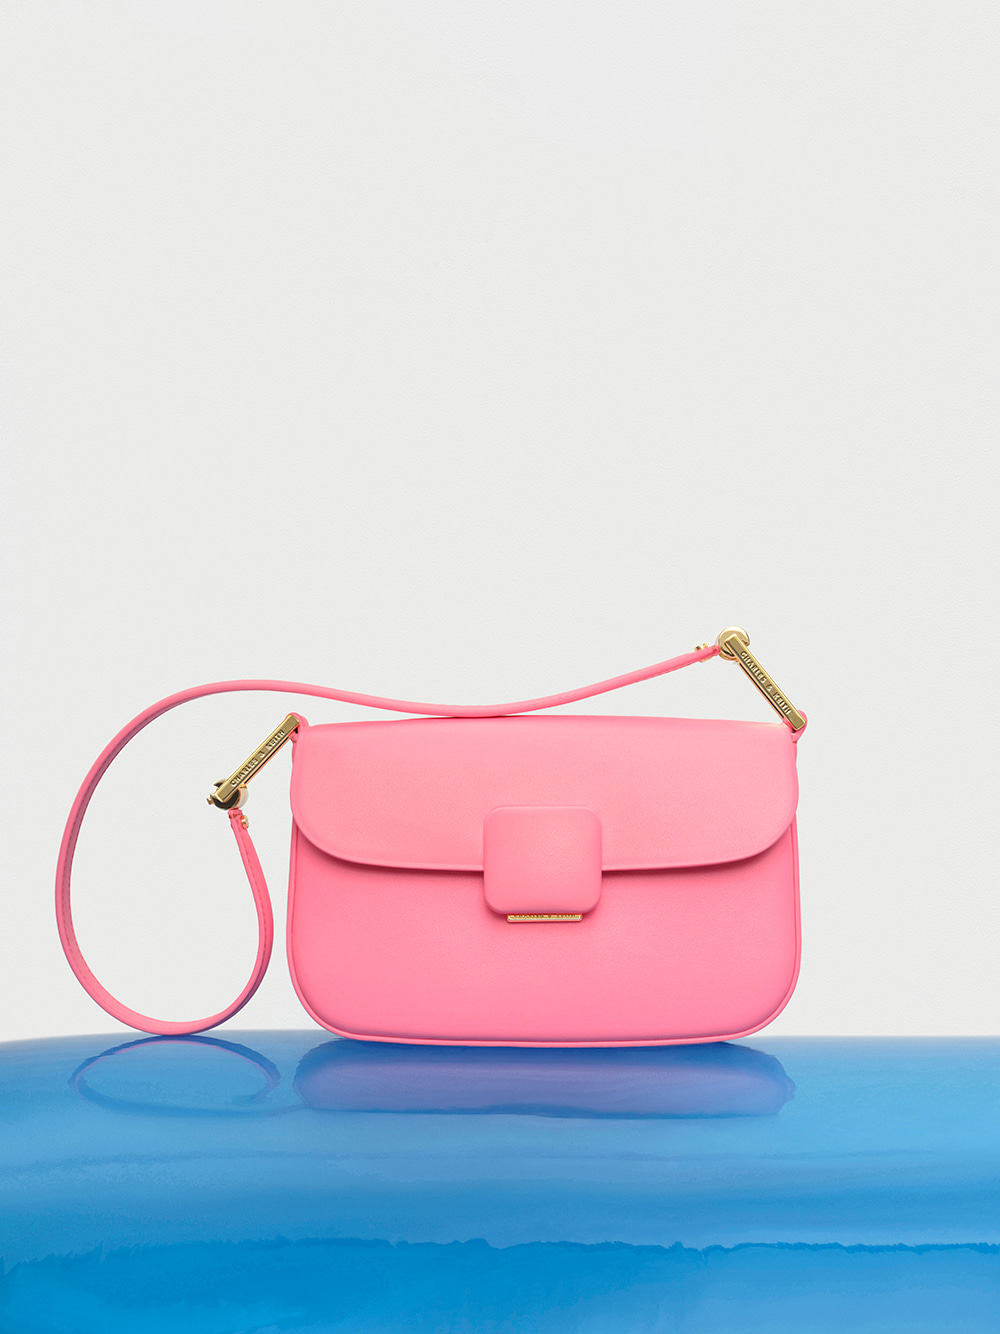 Charles & Keith handbag, Women's Fashion, Bags & Wallets, Shoulder